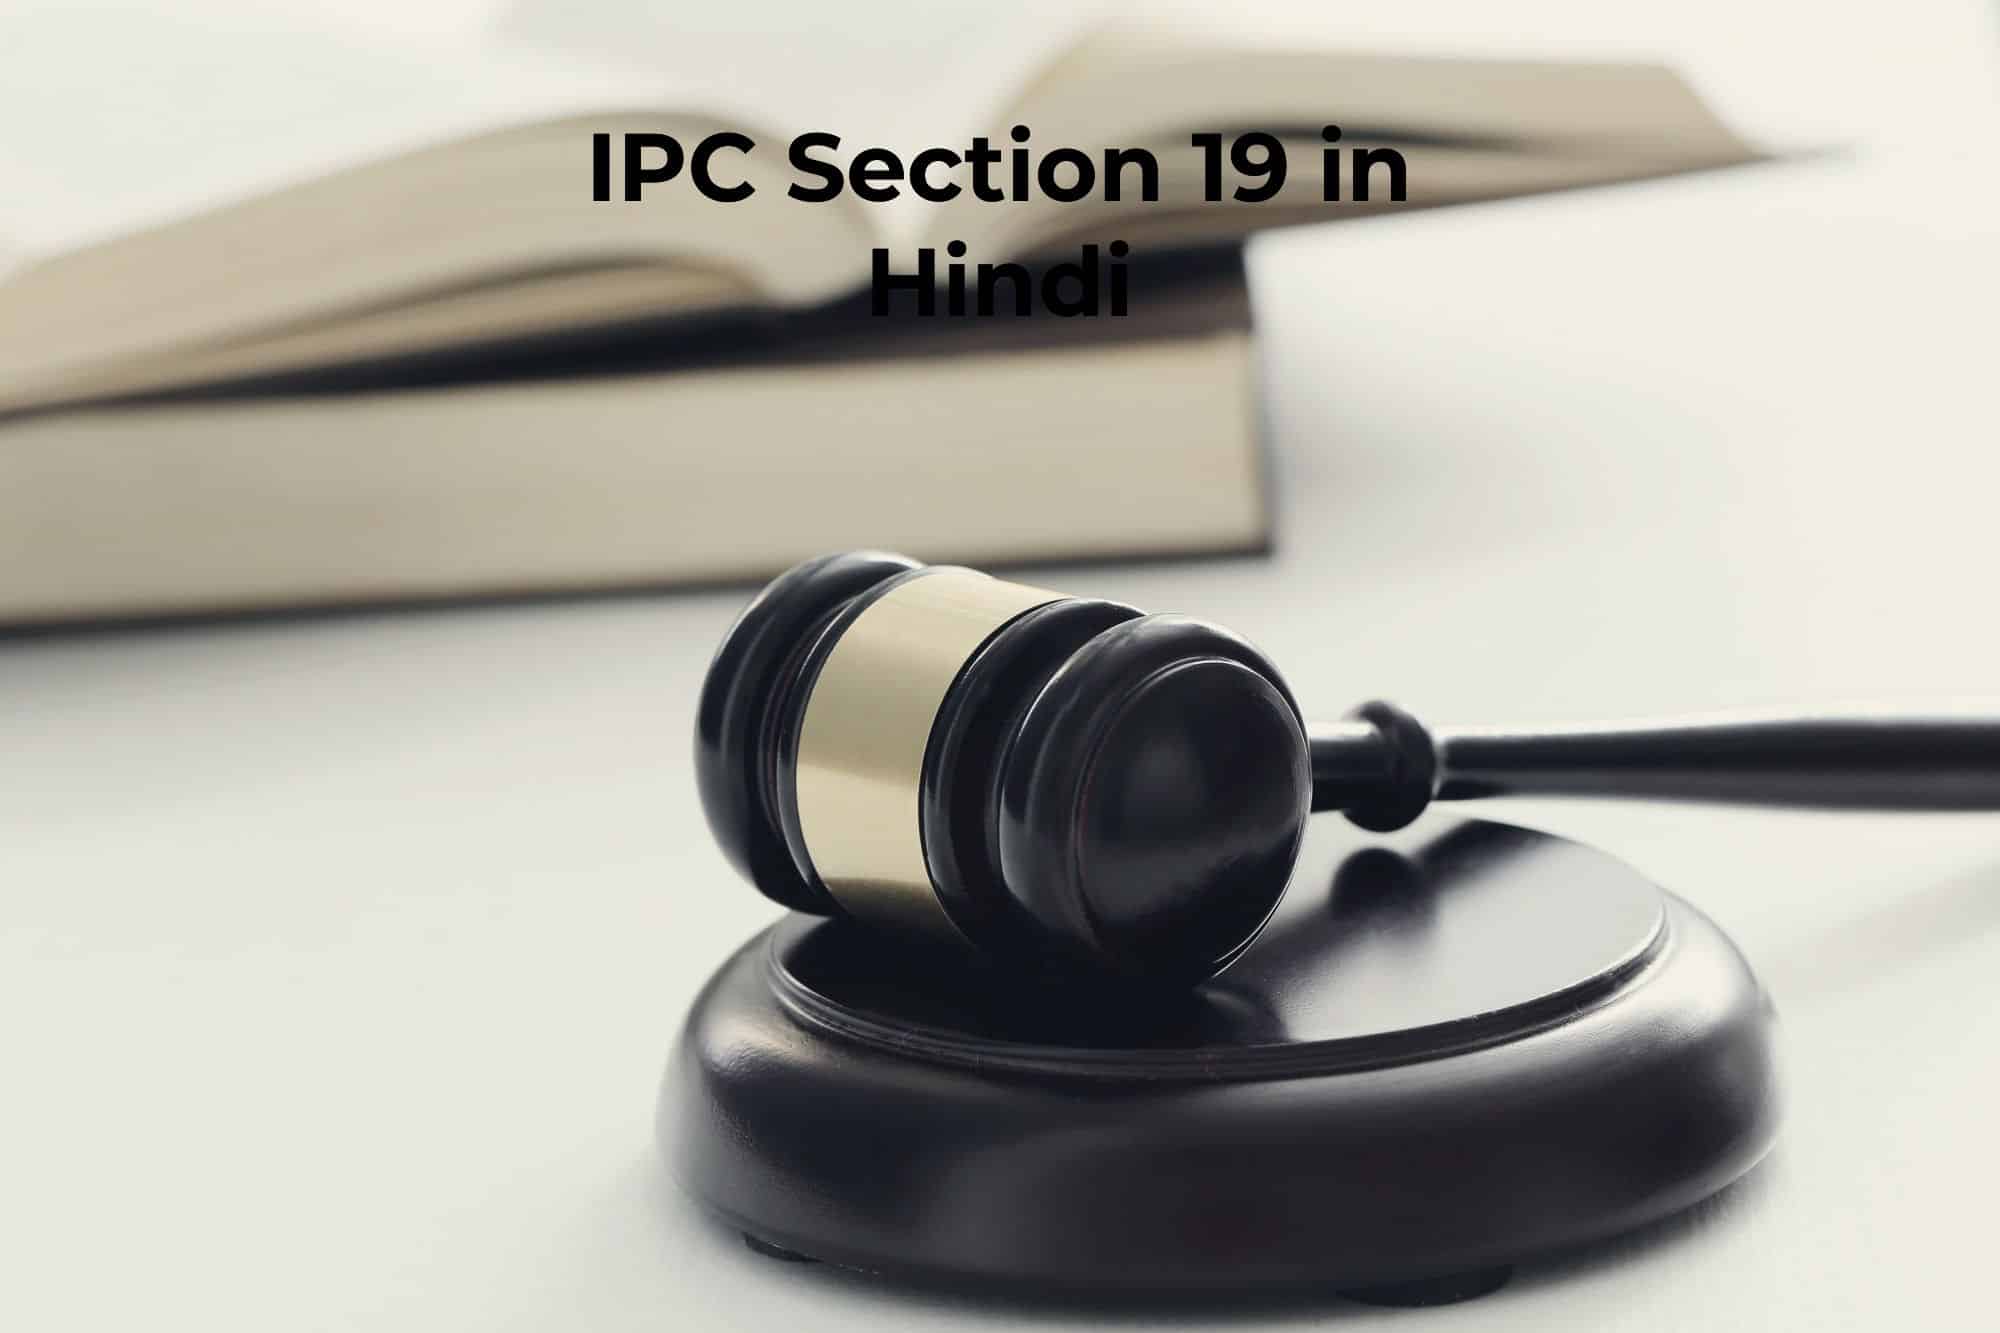 IPC Section 19 in Hindi, आईपीसी धारा 19 क्या है?